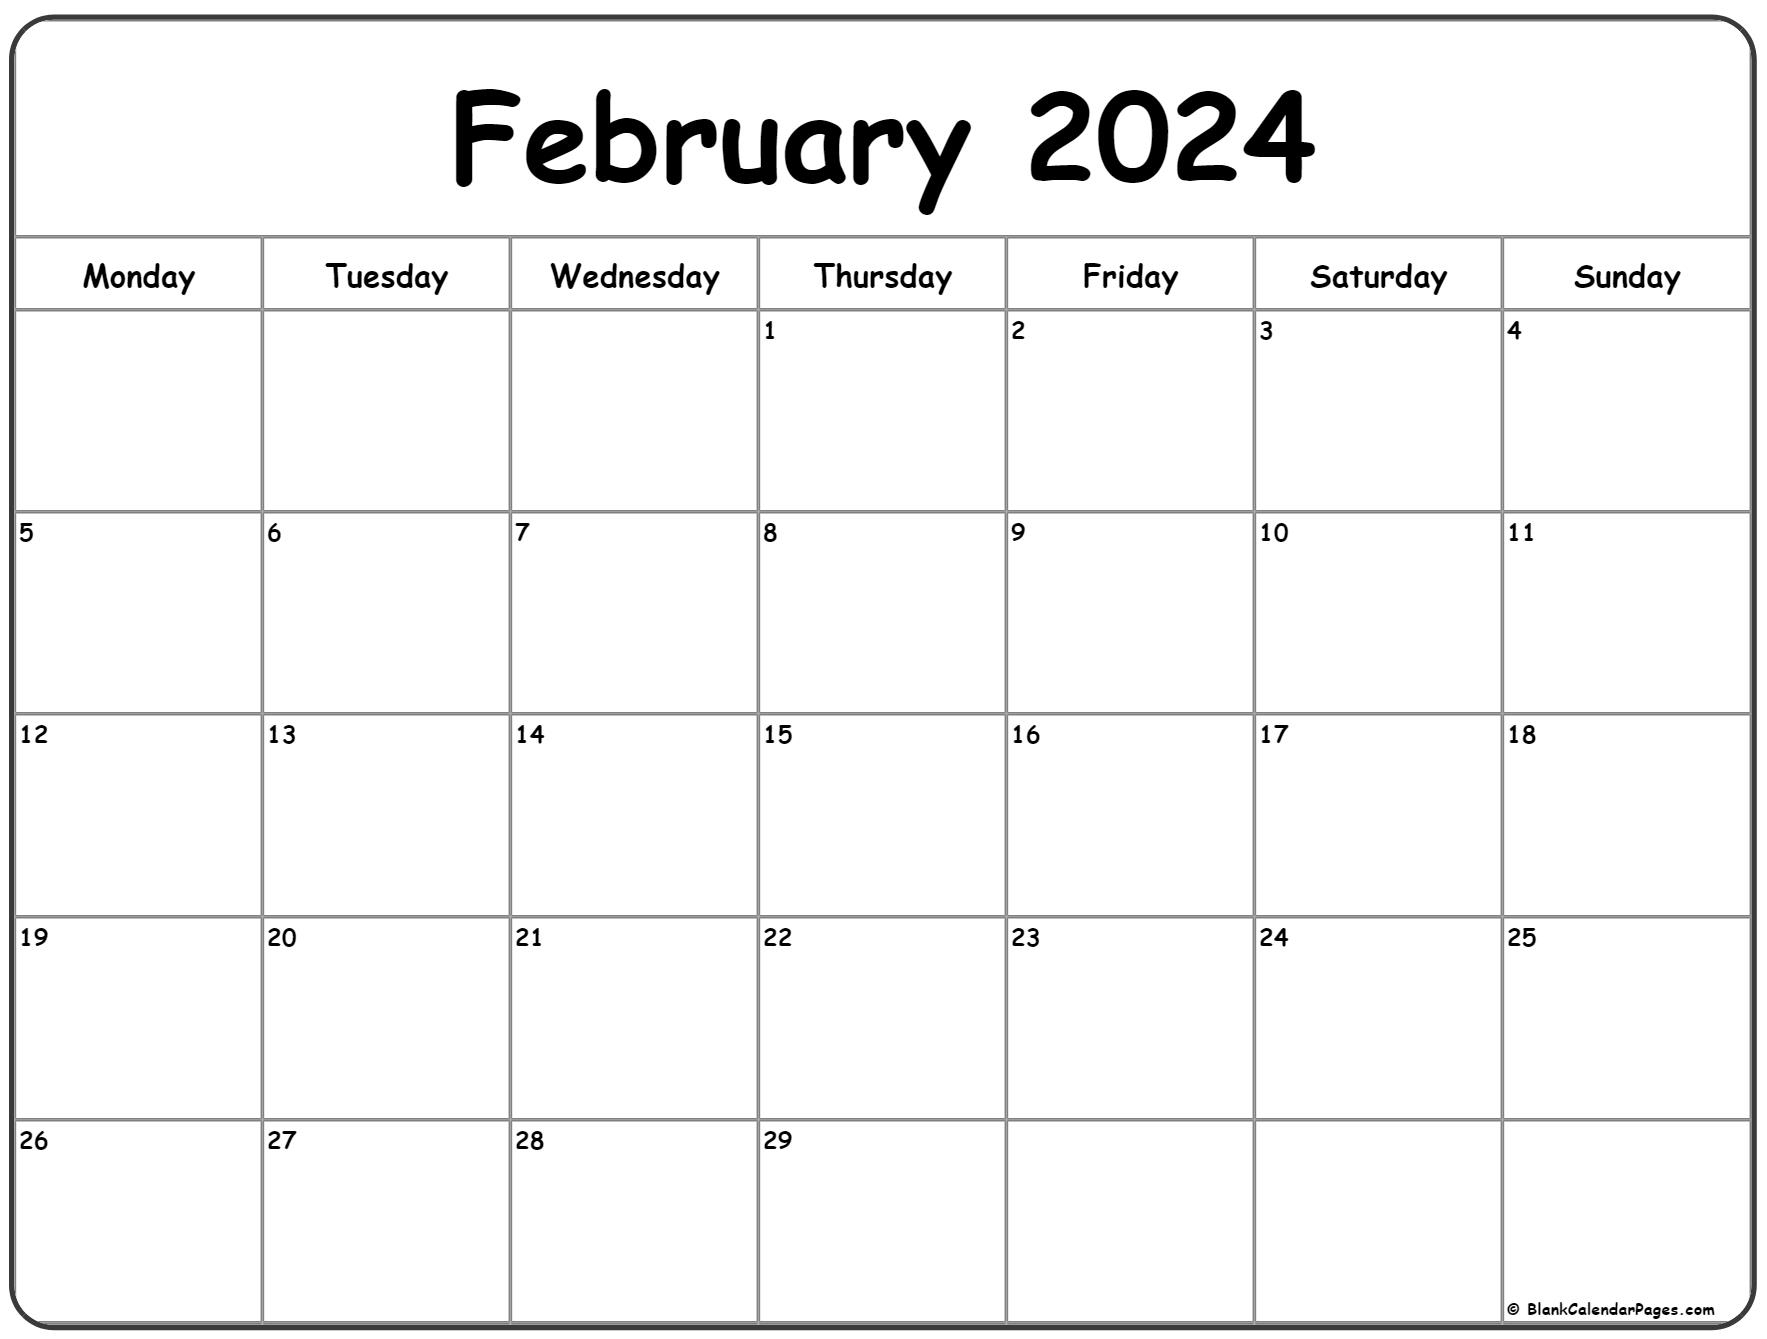 February 2024 Monday Calendar | Monday To Sunday for Printable Feb 2024 Calendar